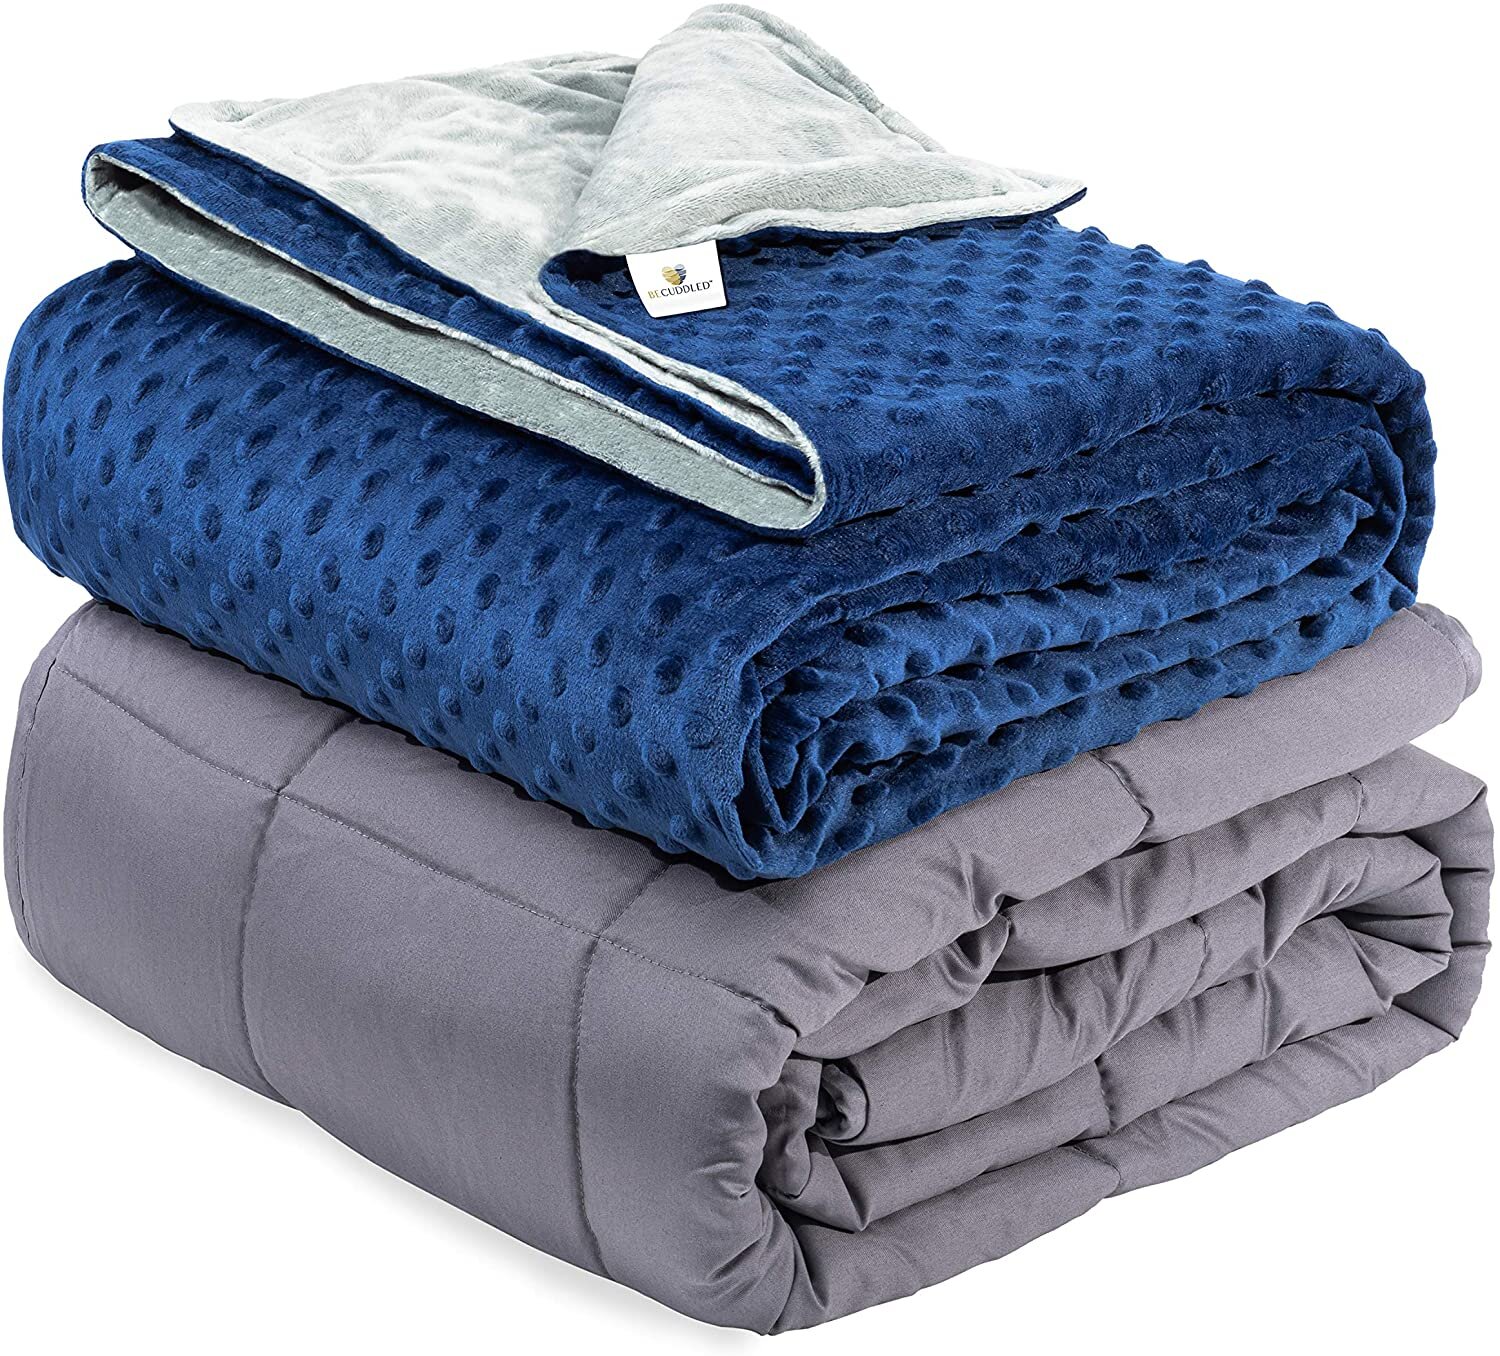 Duvet For Weighted Blanket 60 X 80 - Goimages Portal